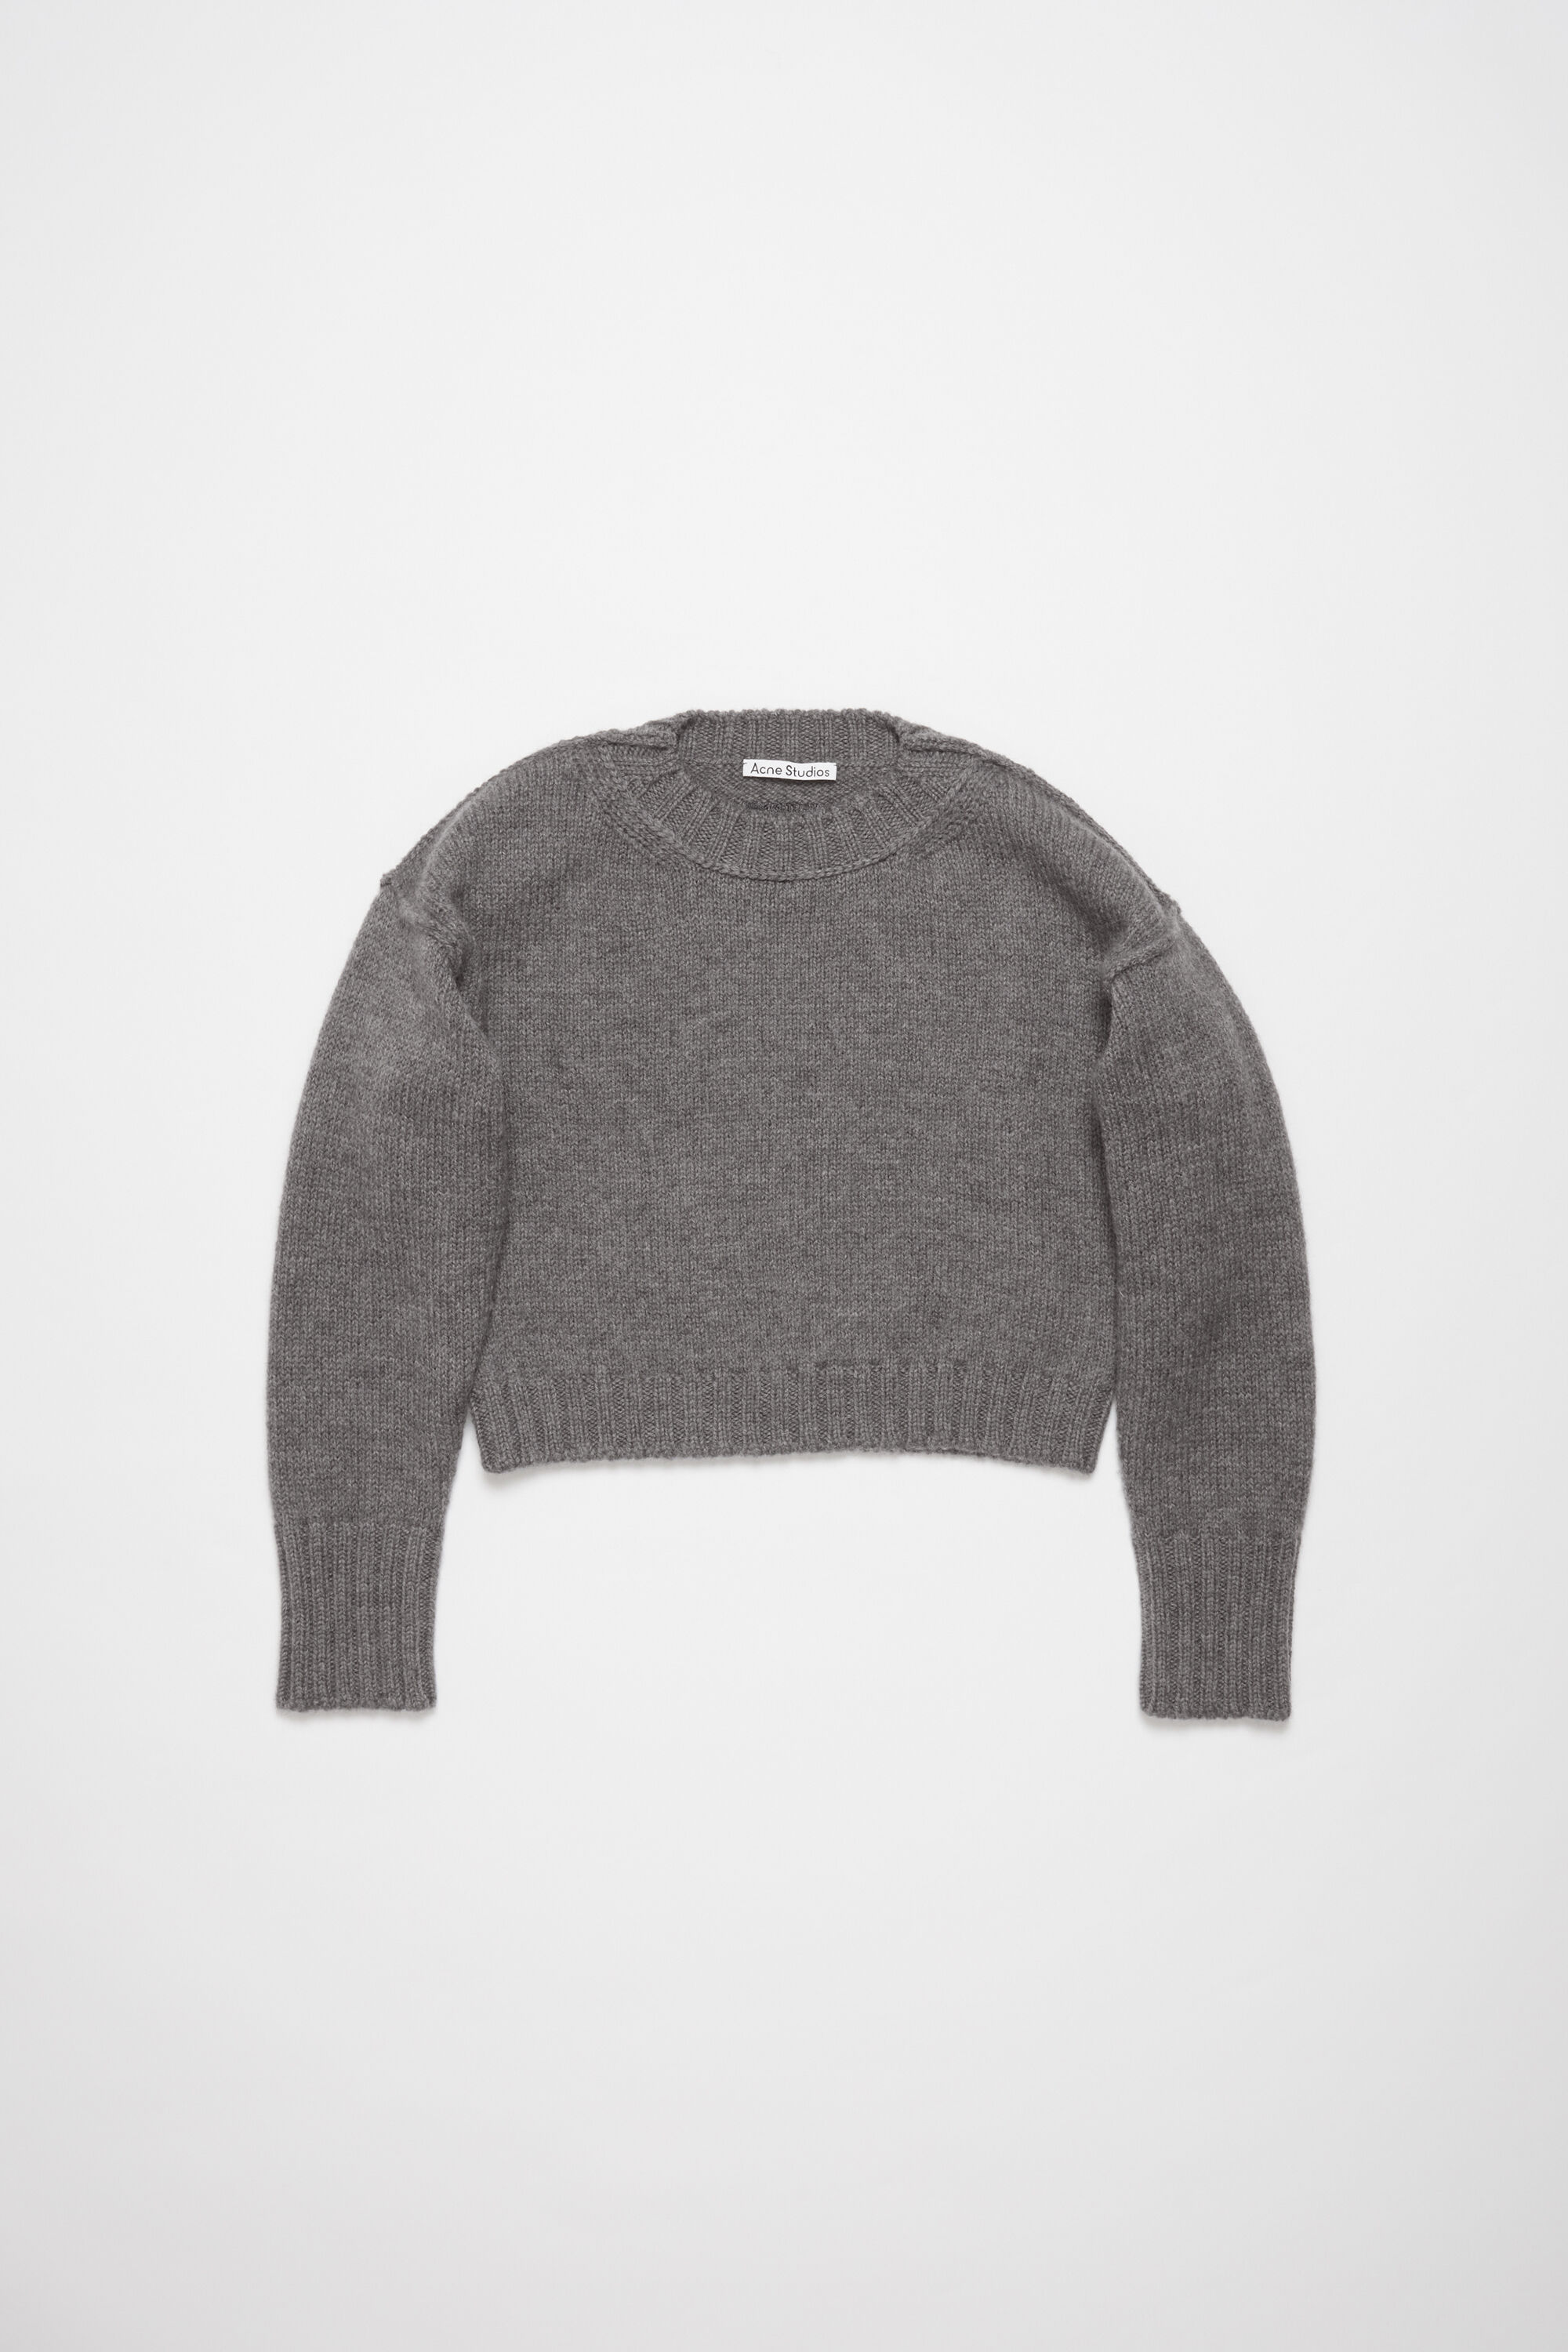 Acne Studios - Crew neck wool jumper - Dark grey